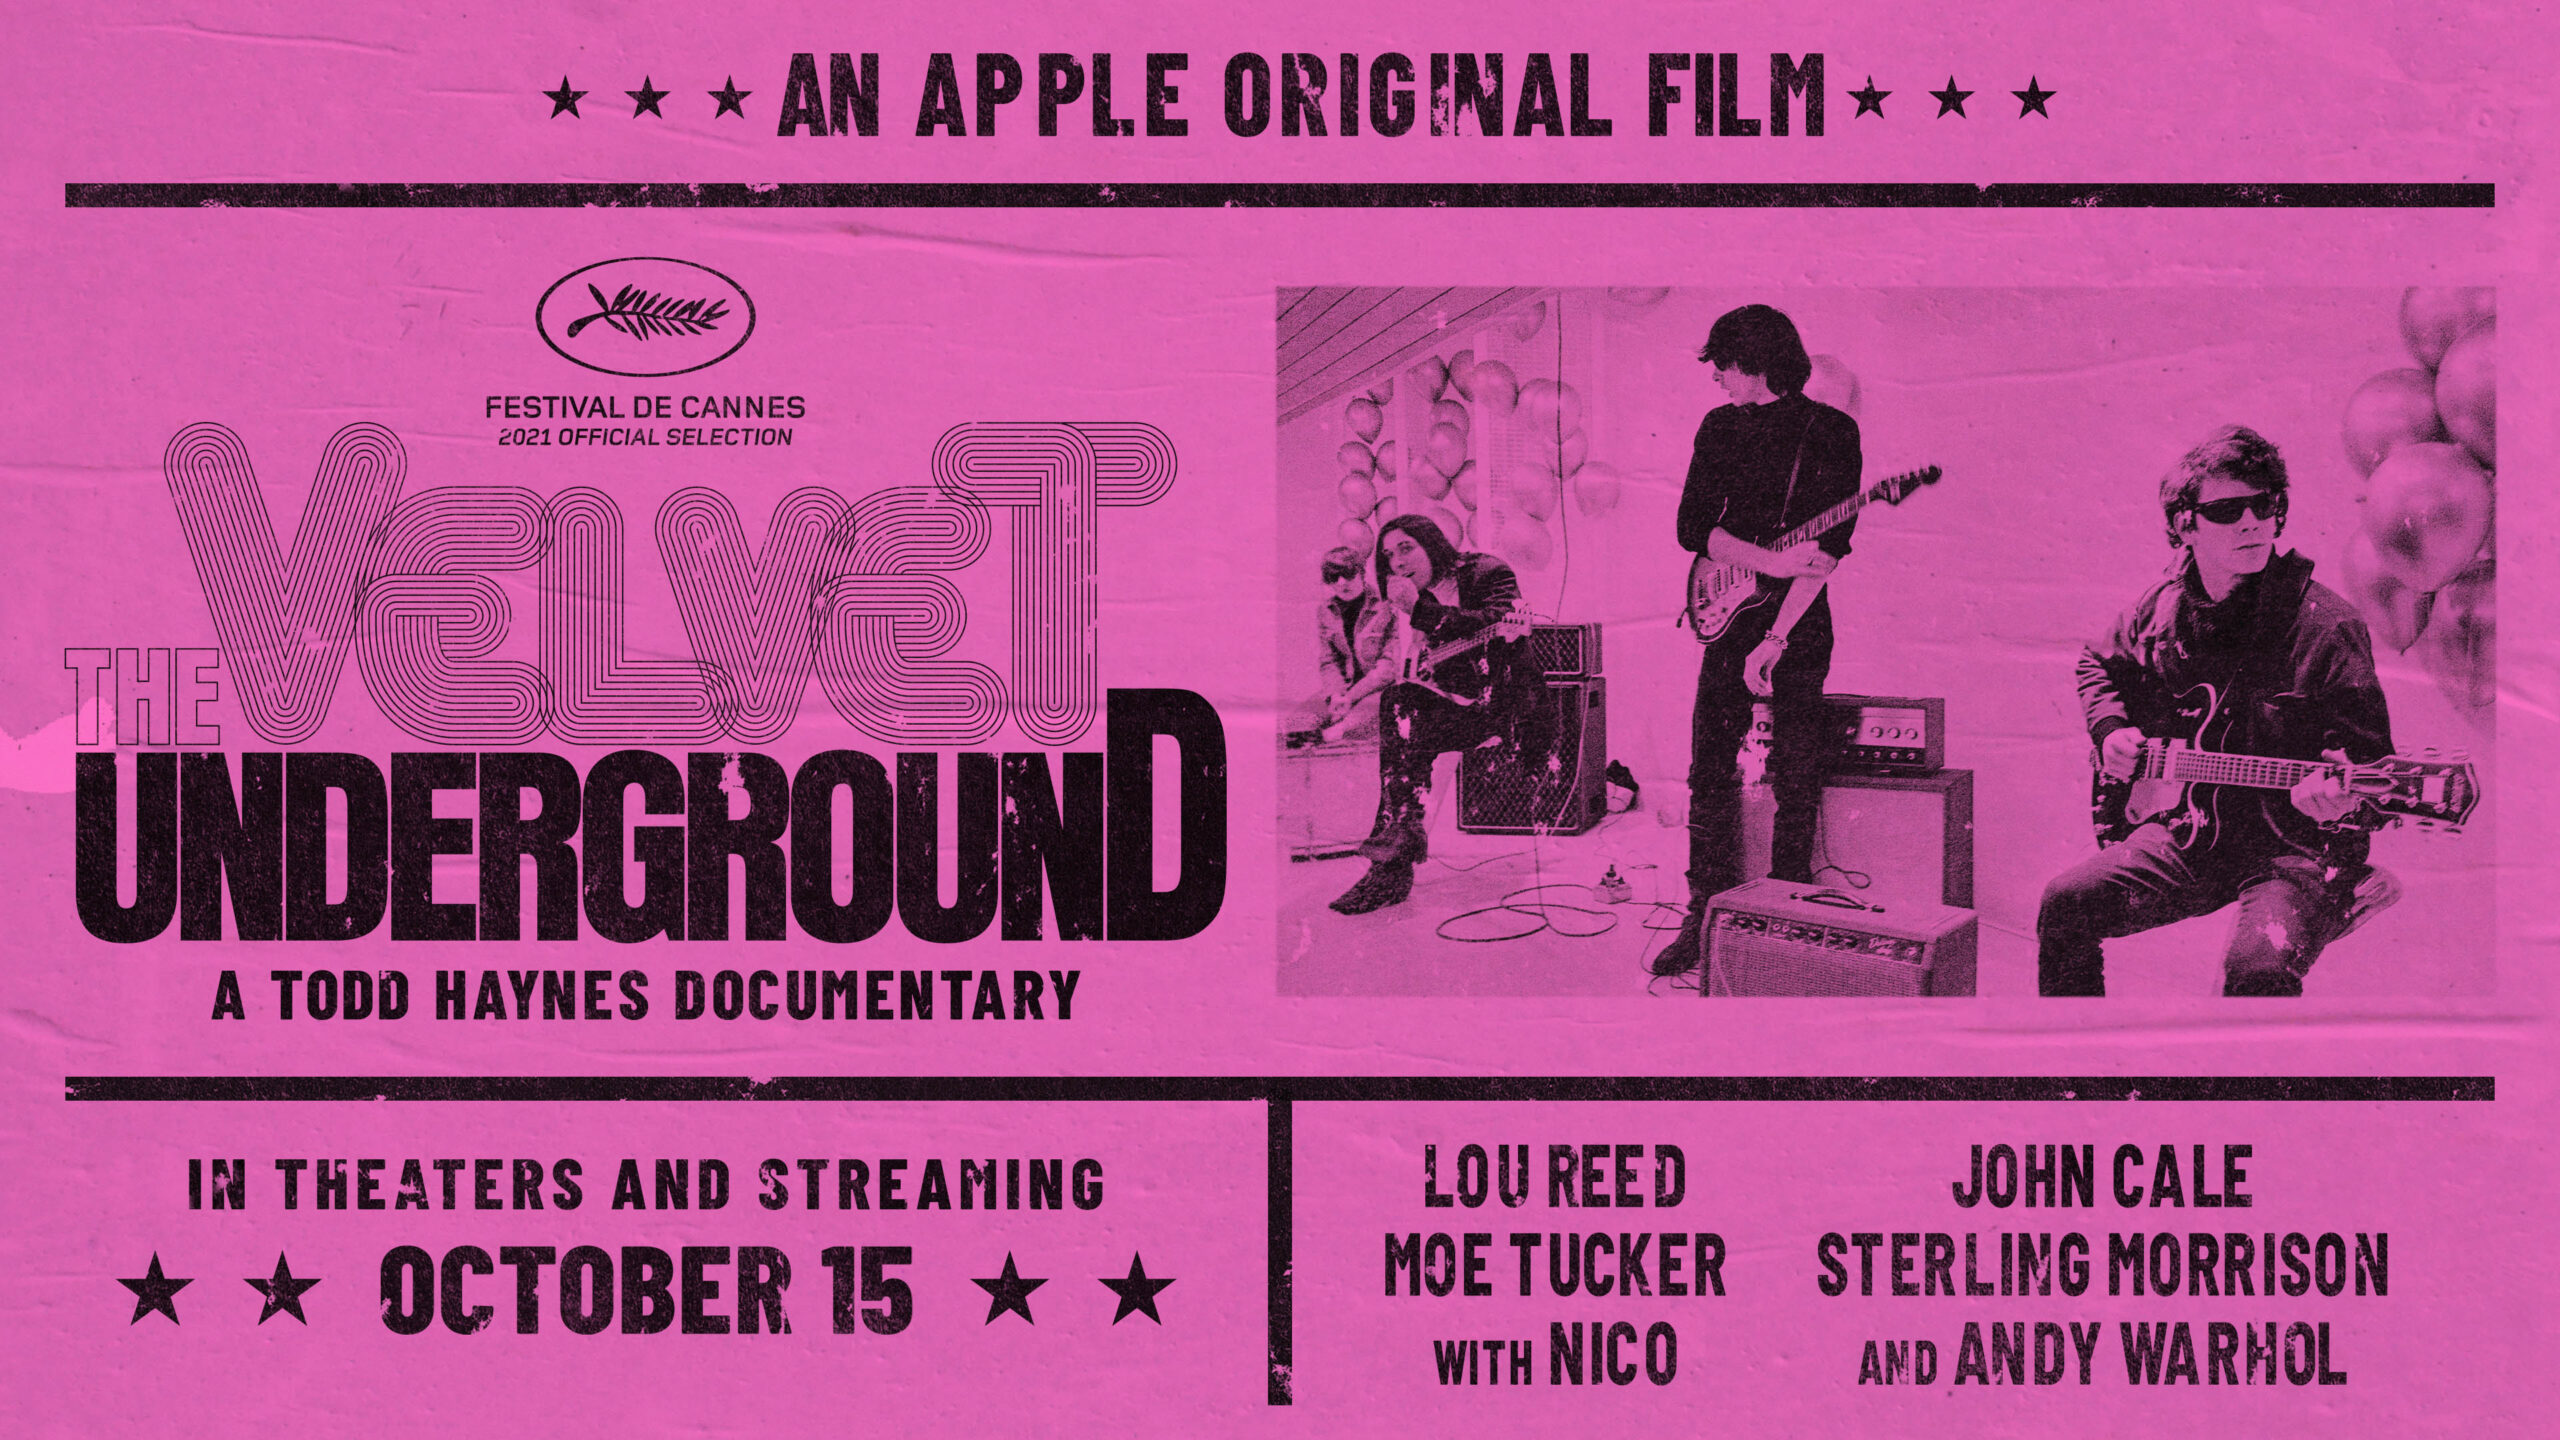 The Velvet Underground di Todd Haynes